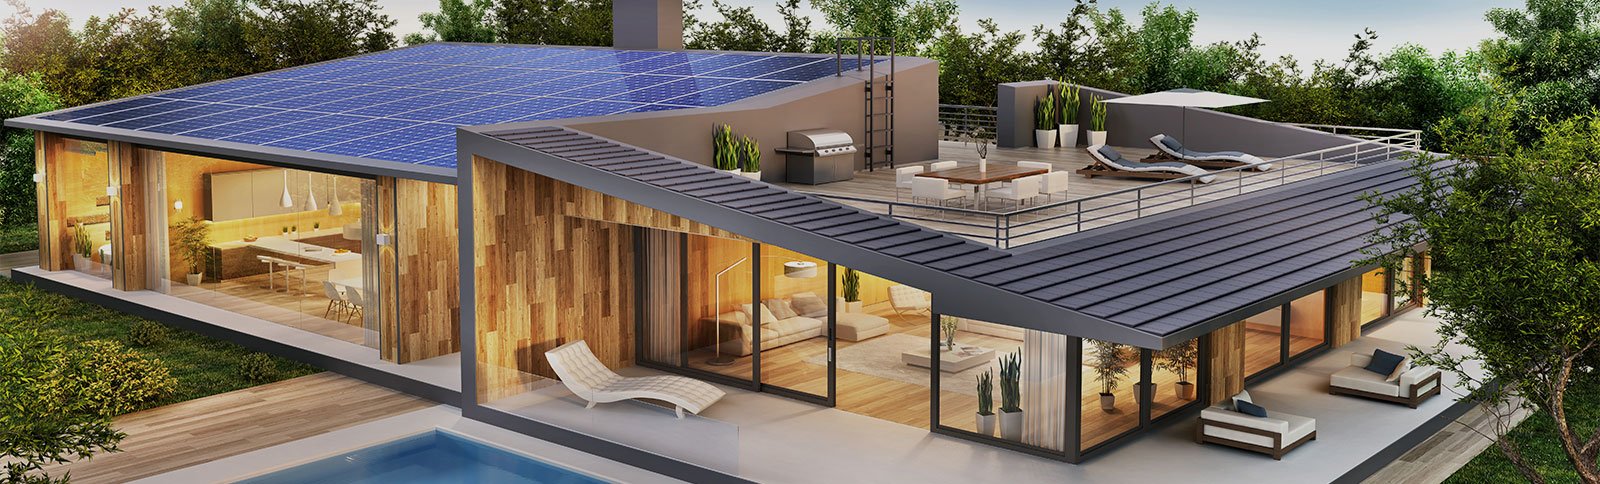 Residential Solar System | Solar for Home - GEE Energy